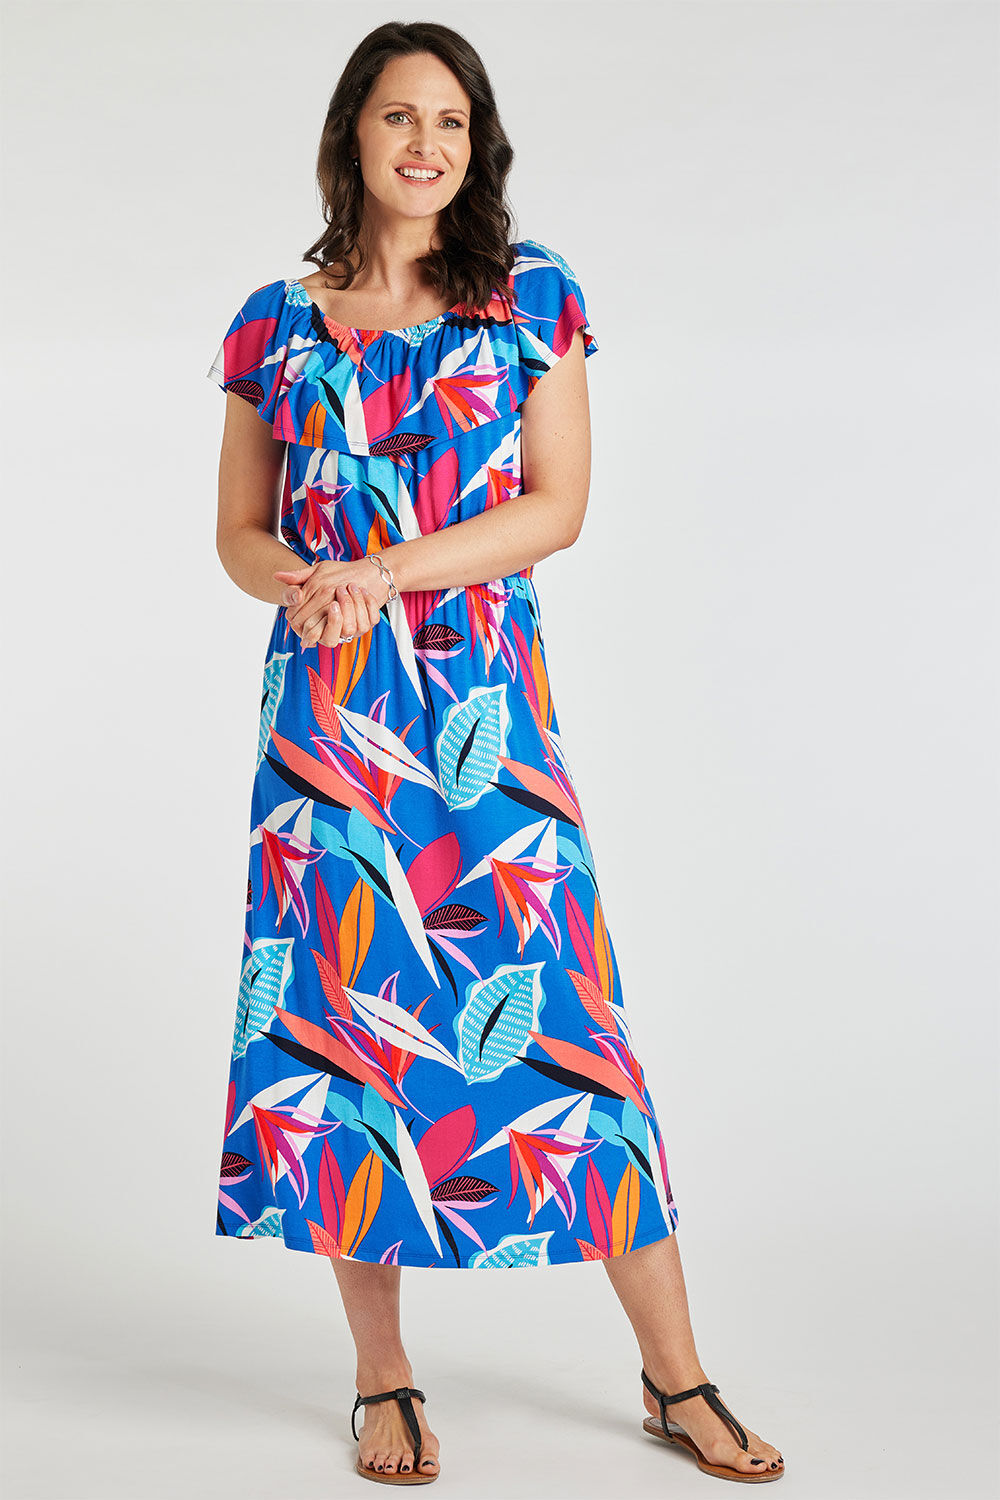 Bonmarche Cobalt Abstract Jungle Print Bardot Jersey Dress, Size: 24